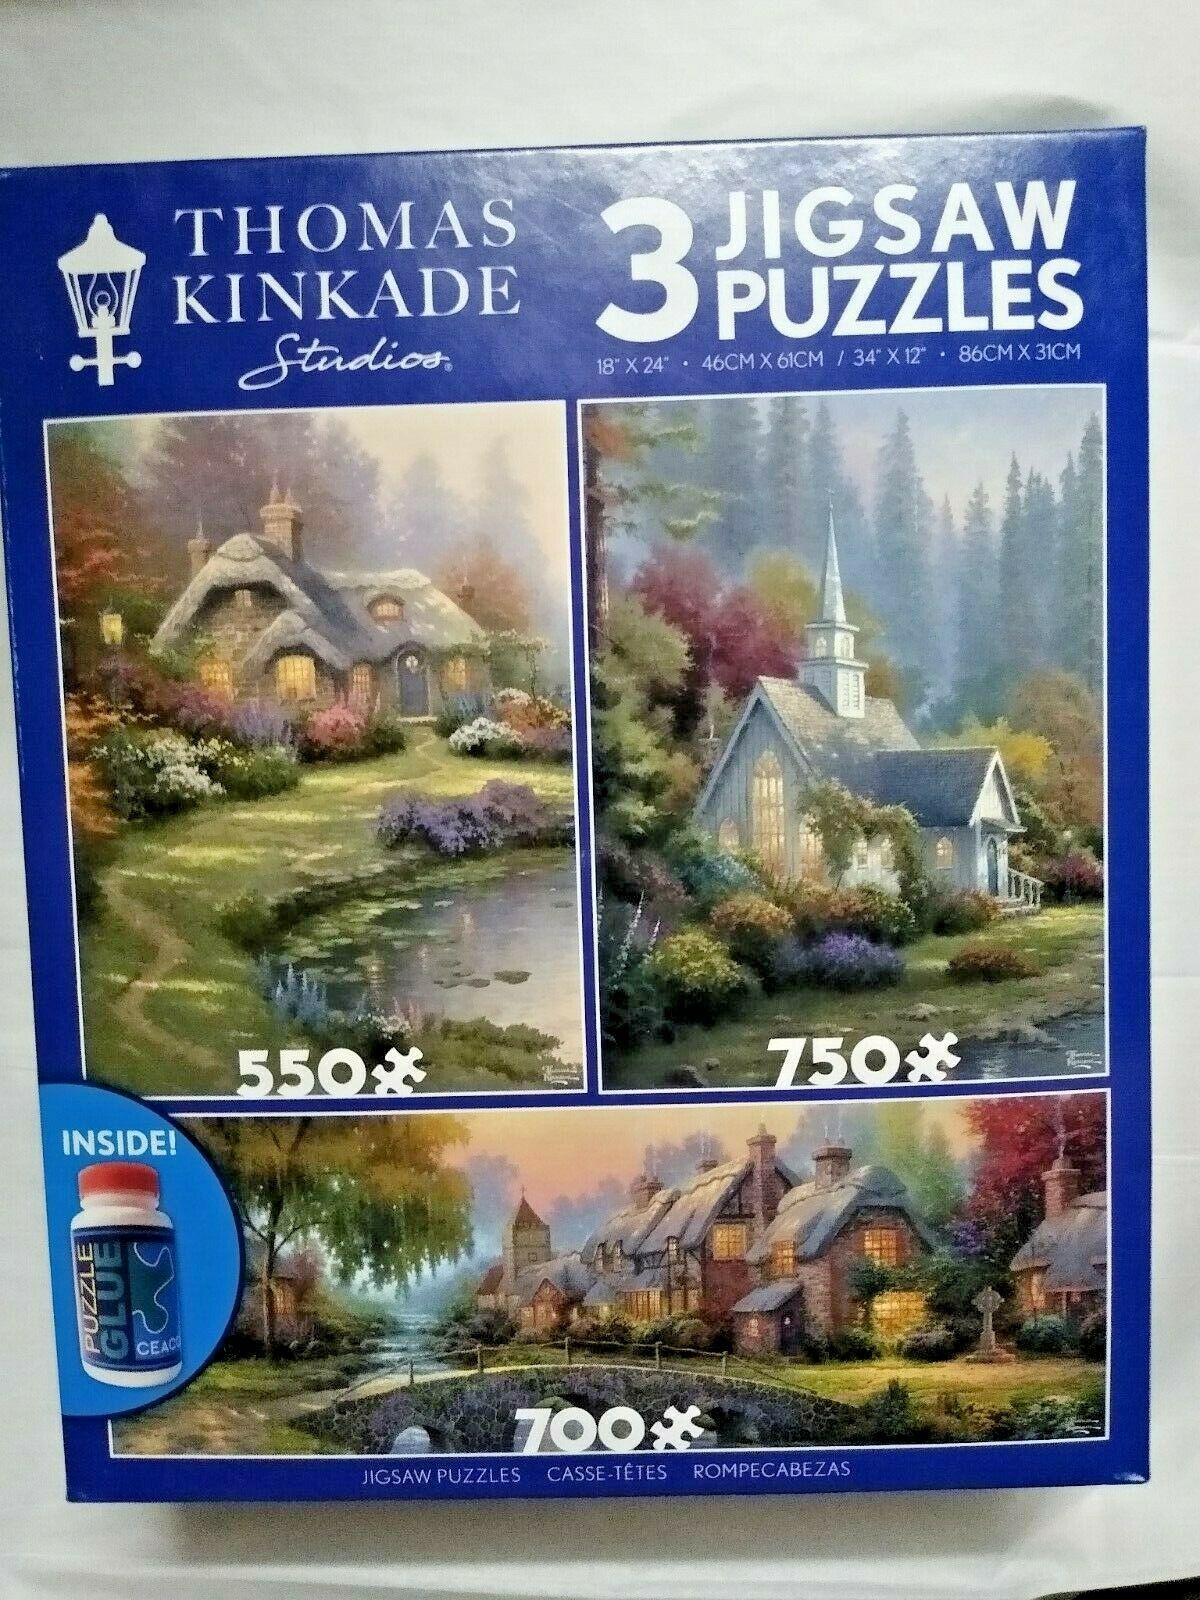 Thomas Kinkade & Disney's Beauty & The Beast 750 Piece Puzzle Complete